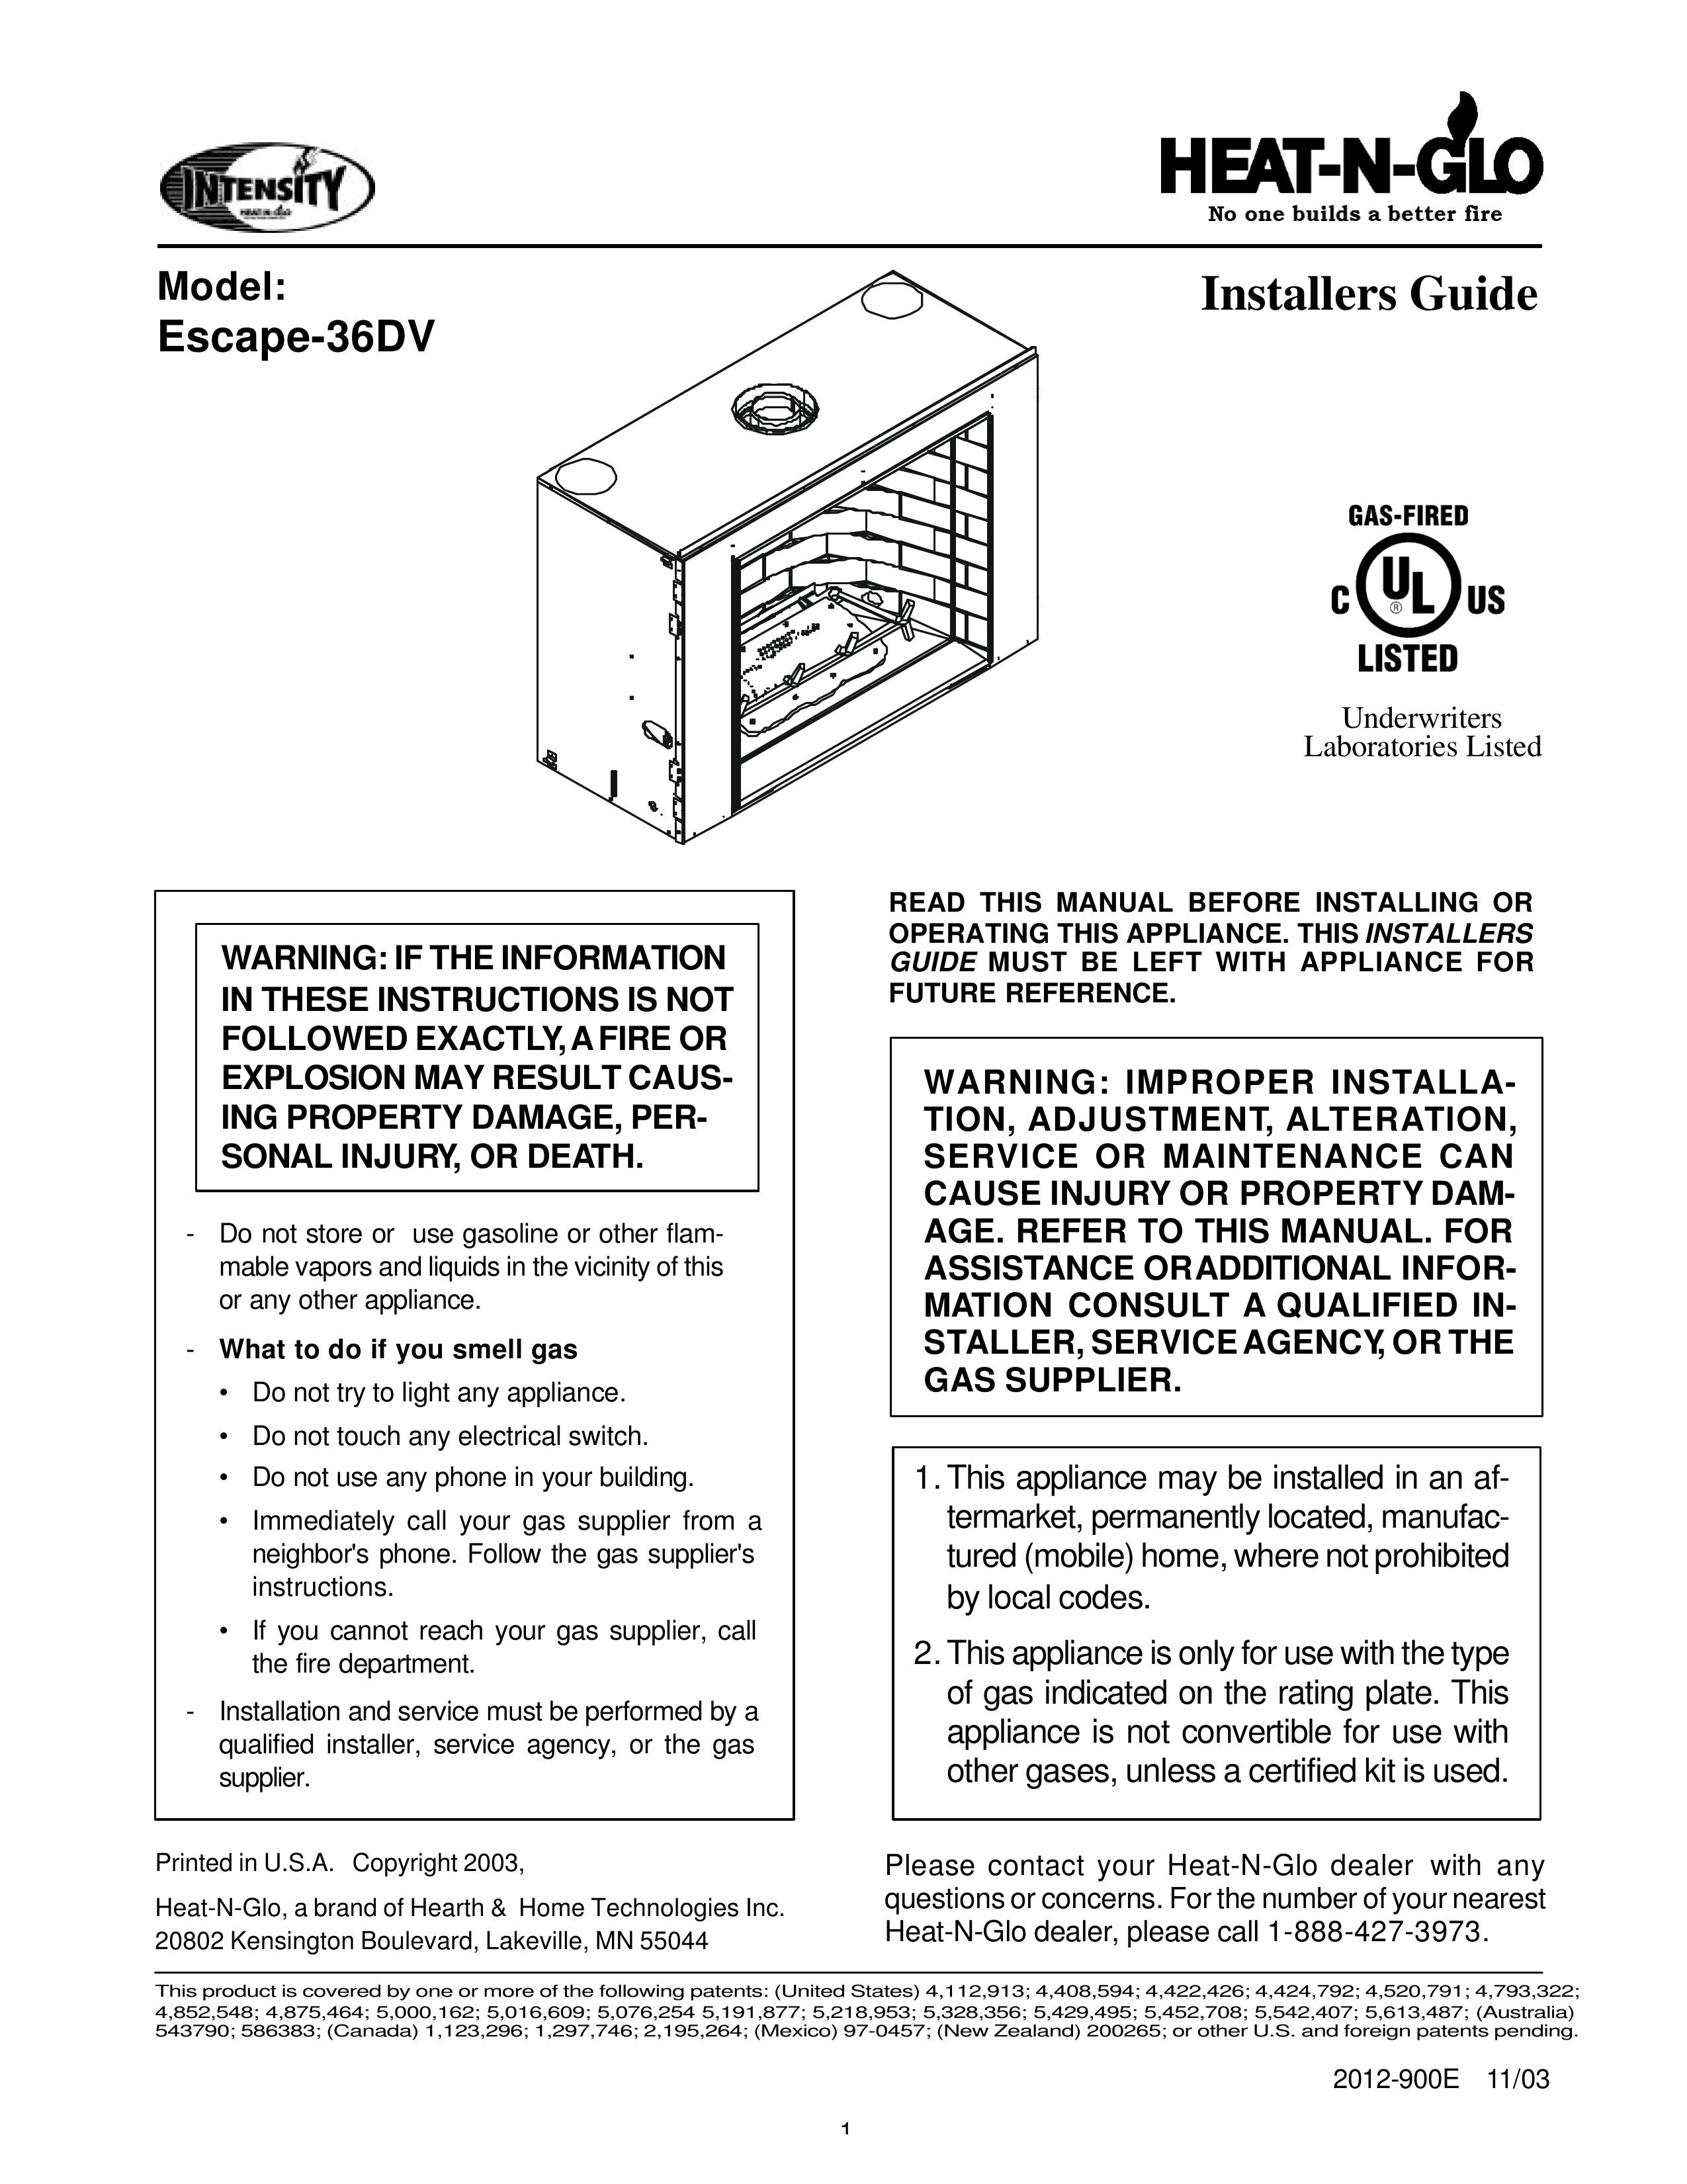 Heat & Glo LifeStyle 36DV Fire Pit User Manual